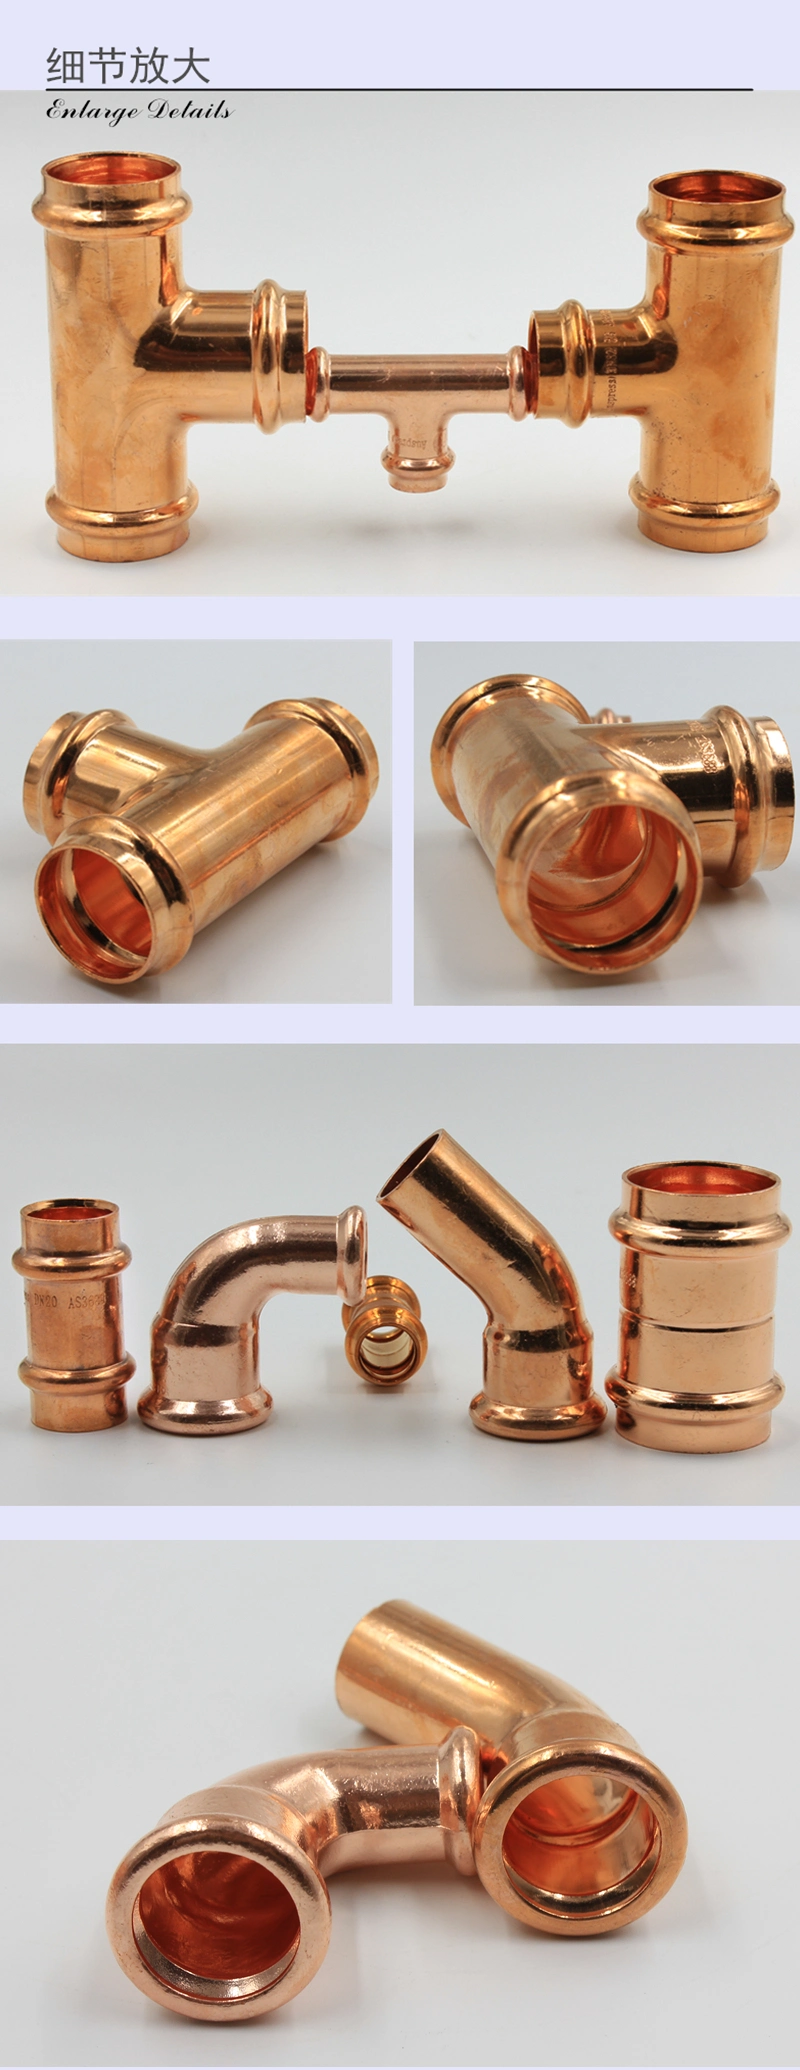 Copper Press Tee Socket Elbow Plumbing Fitting Australia Standard